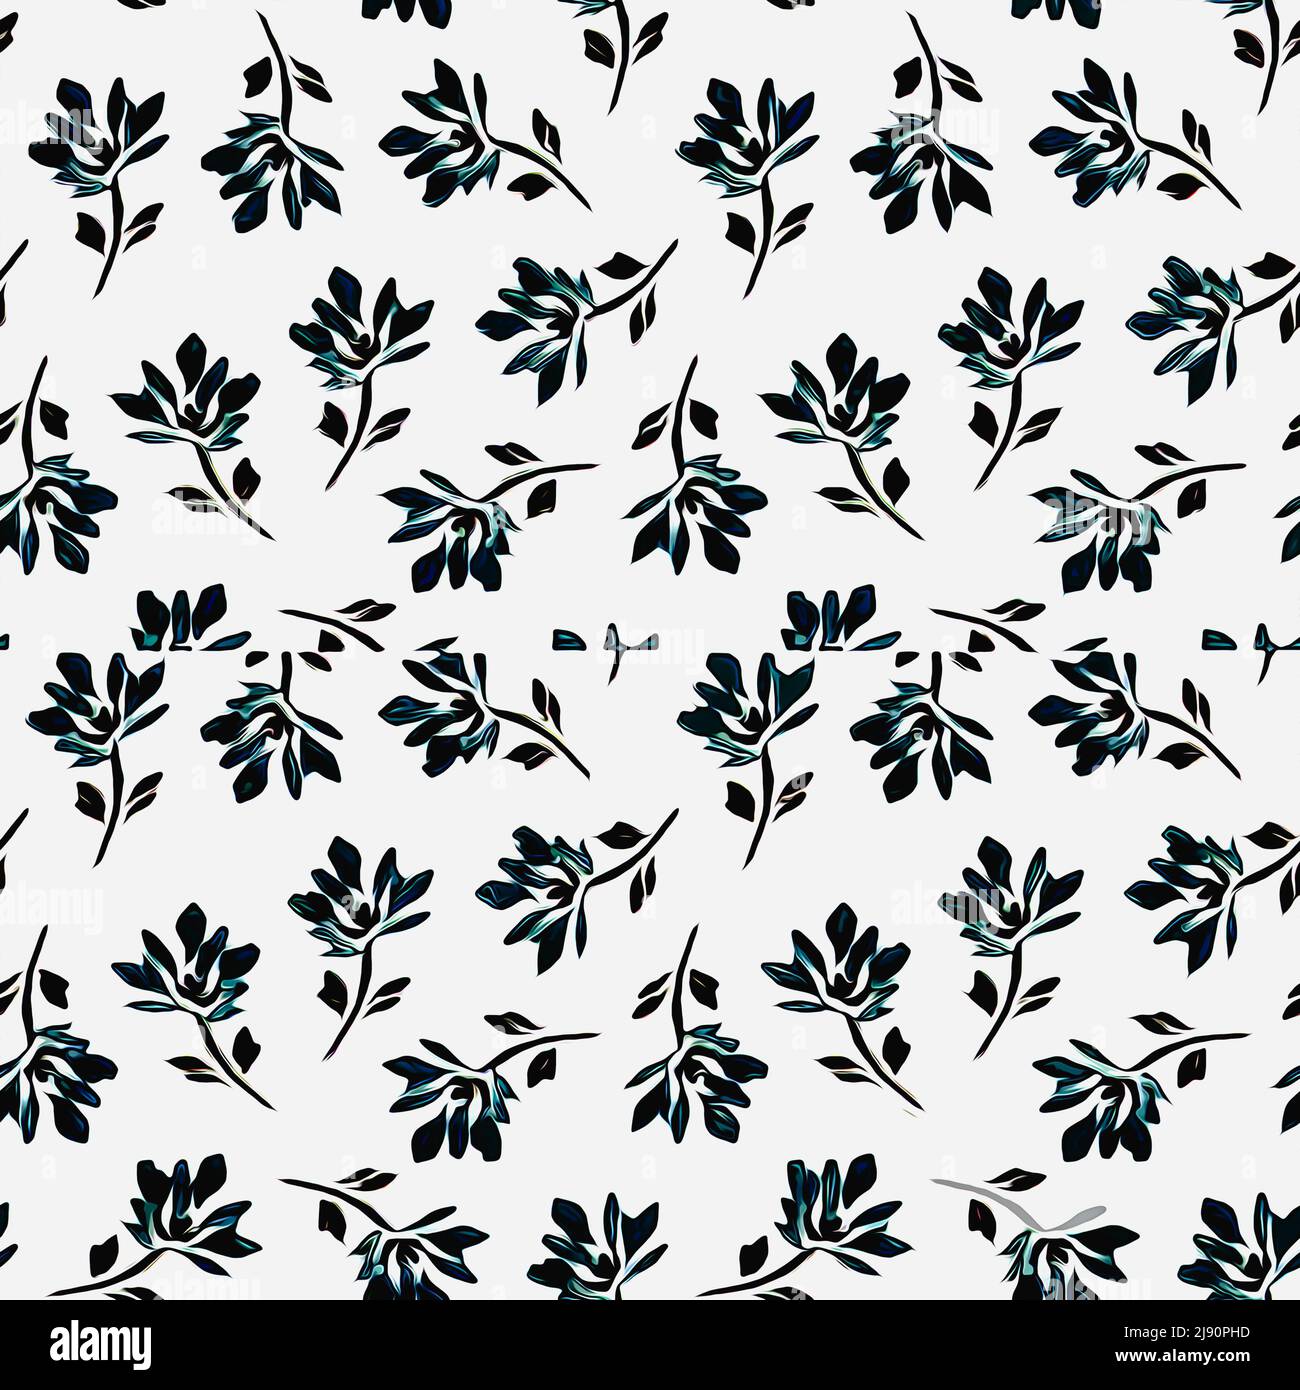 Textile and wallpaper patterns. A printable digital illustration